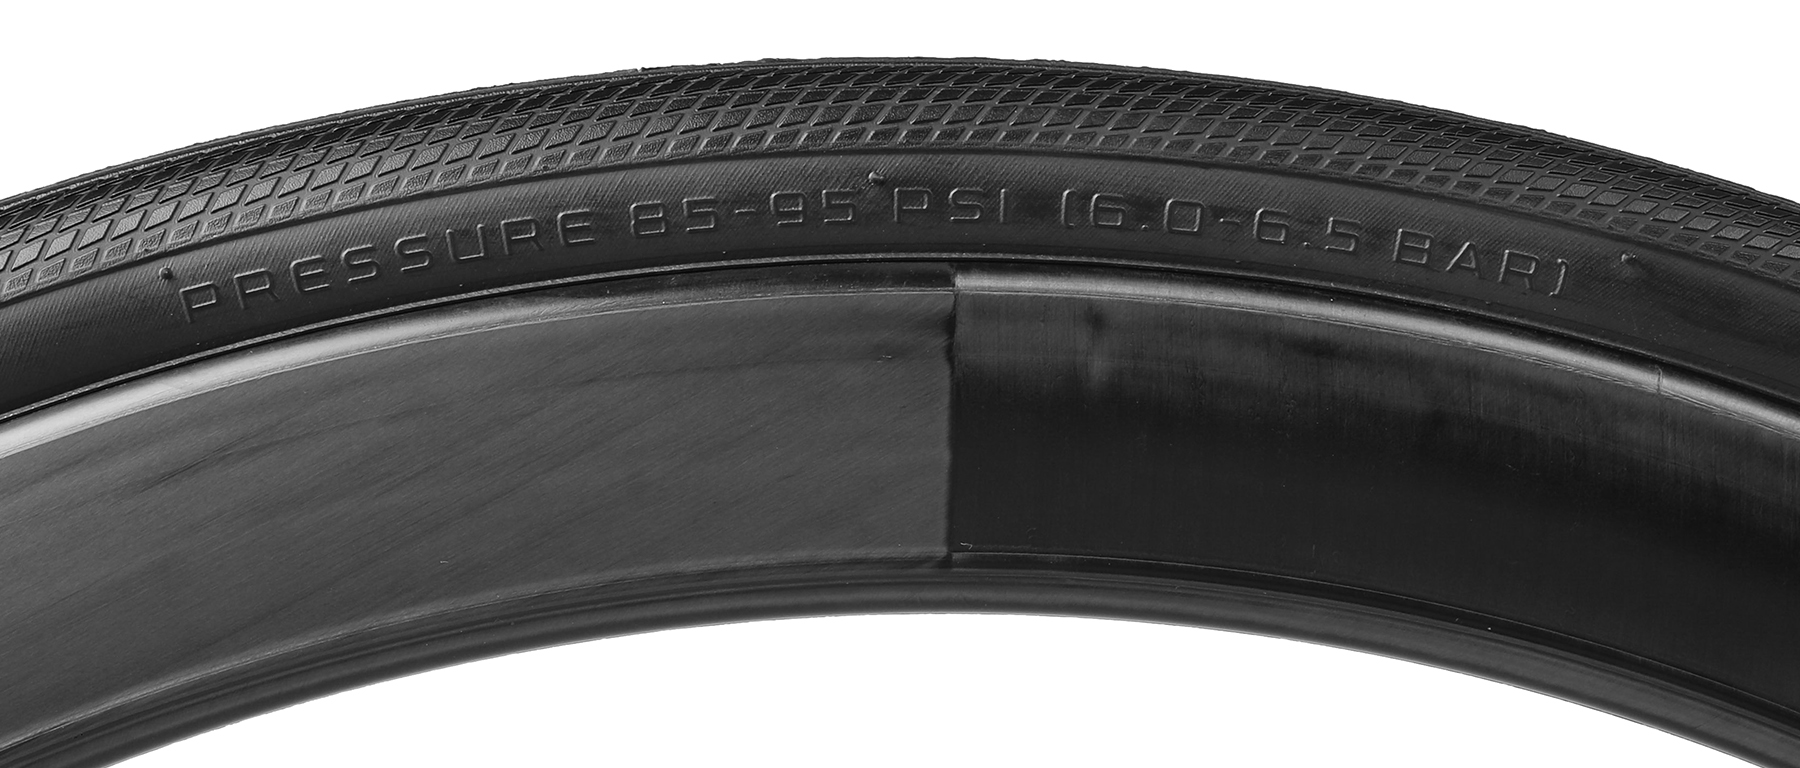 Specialized Roadsport Elite Tire